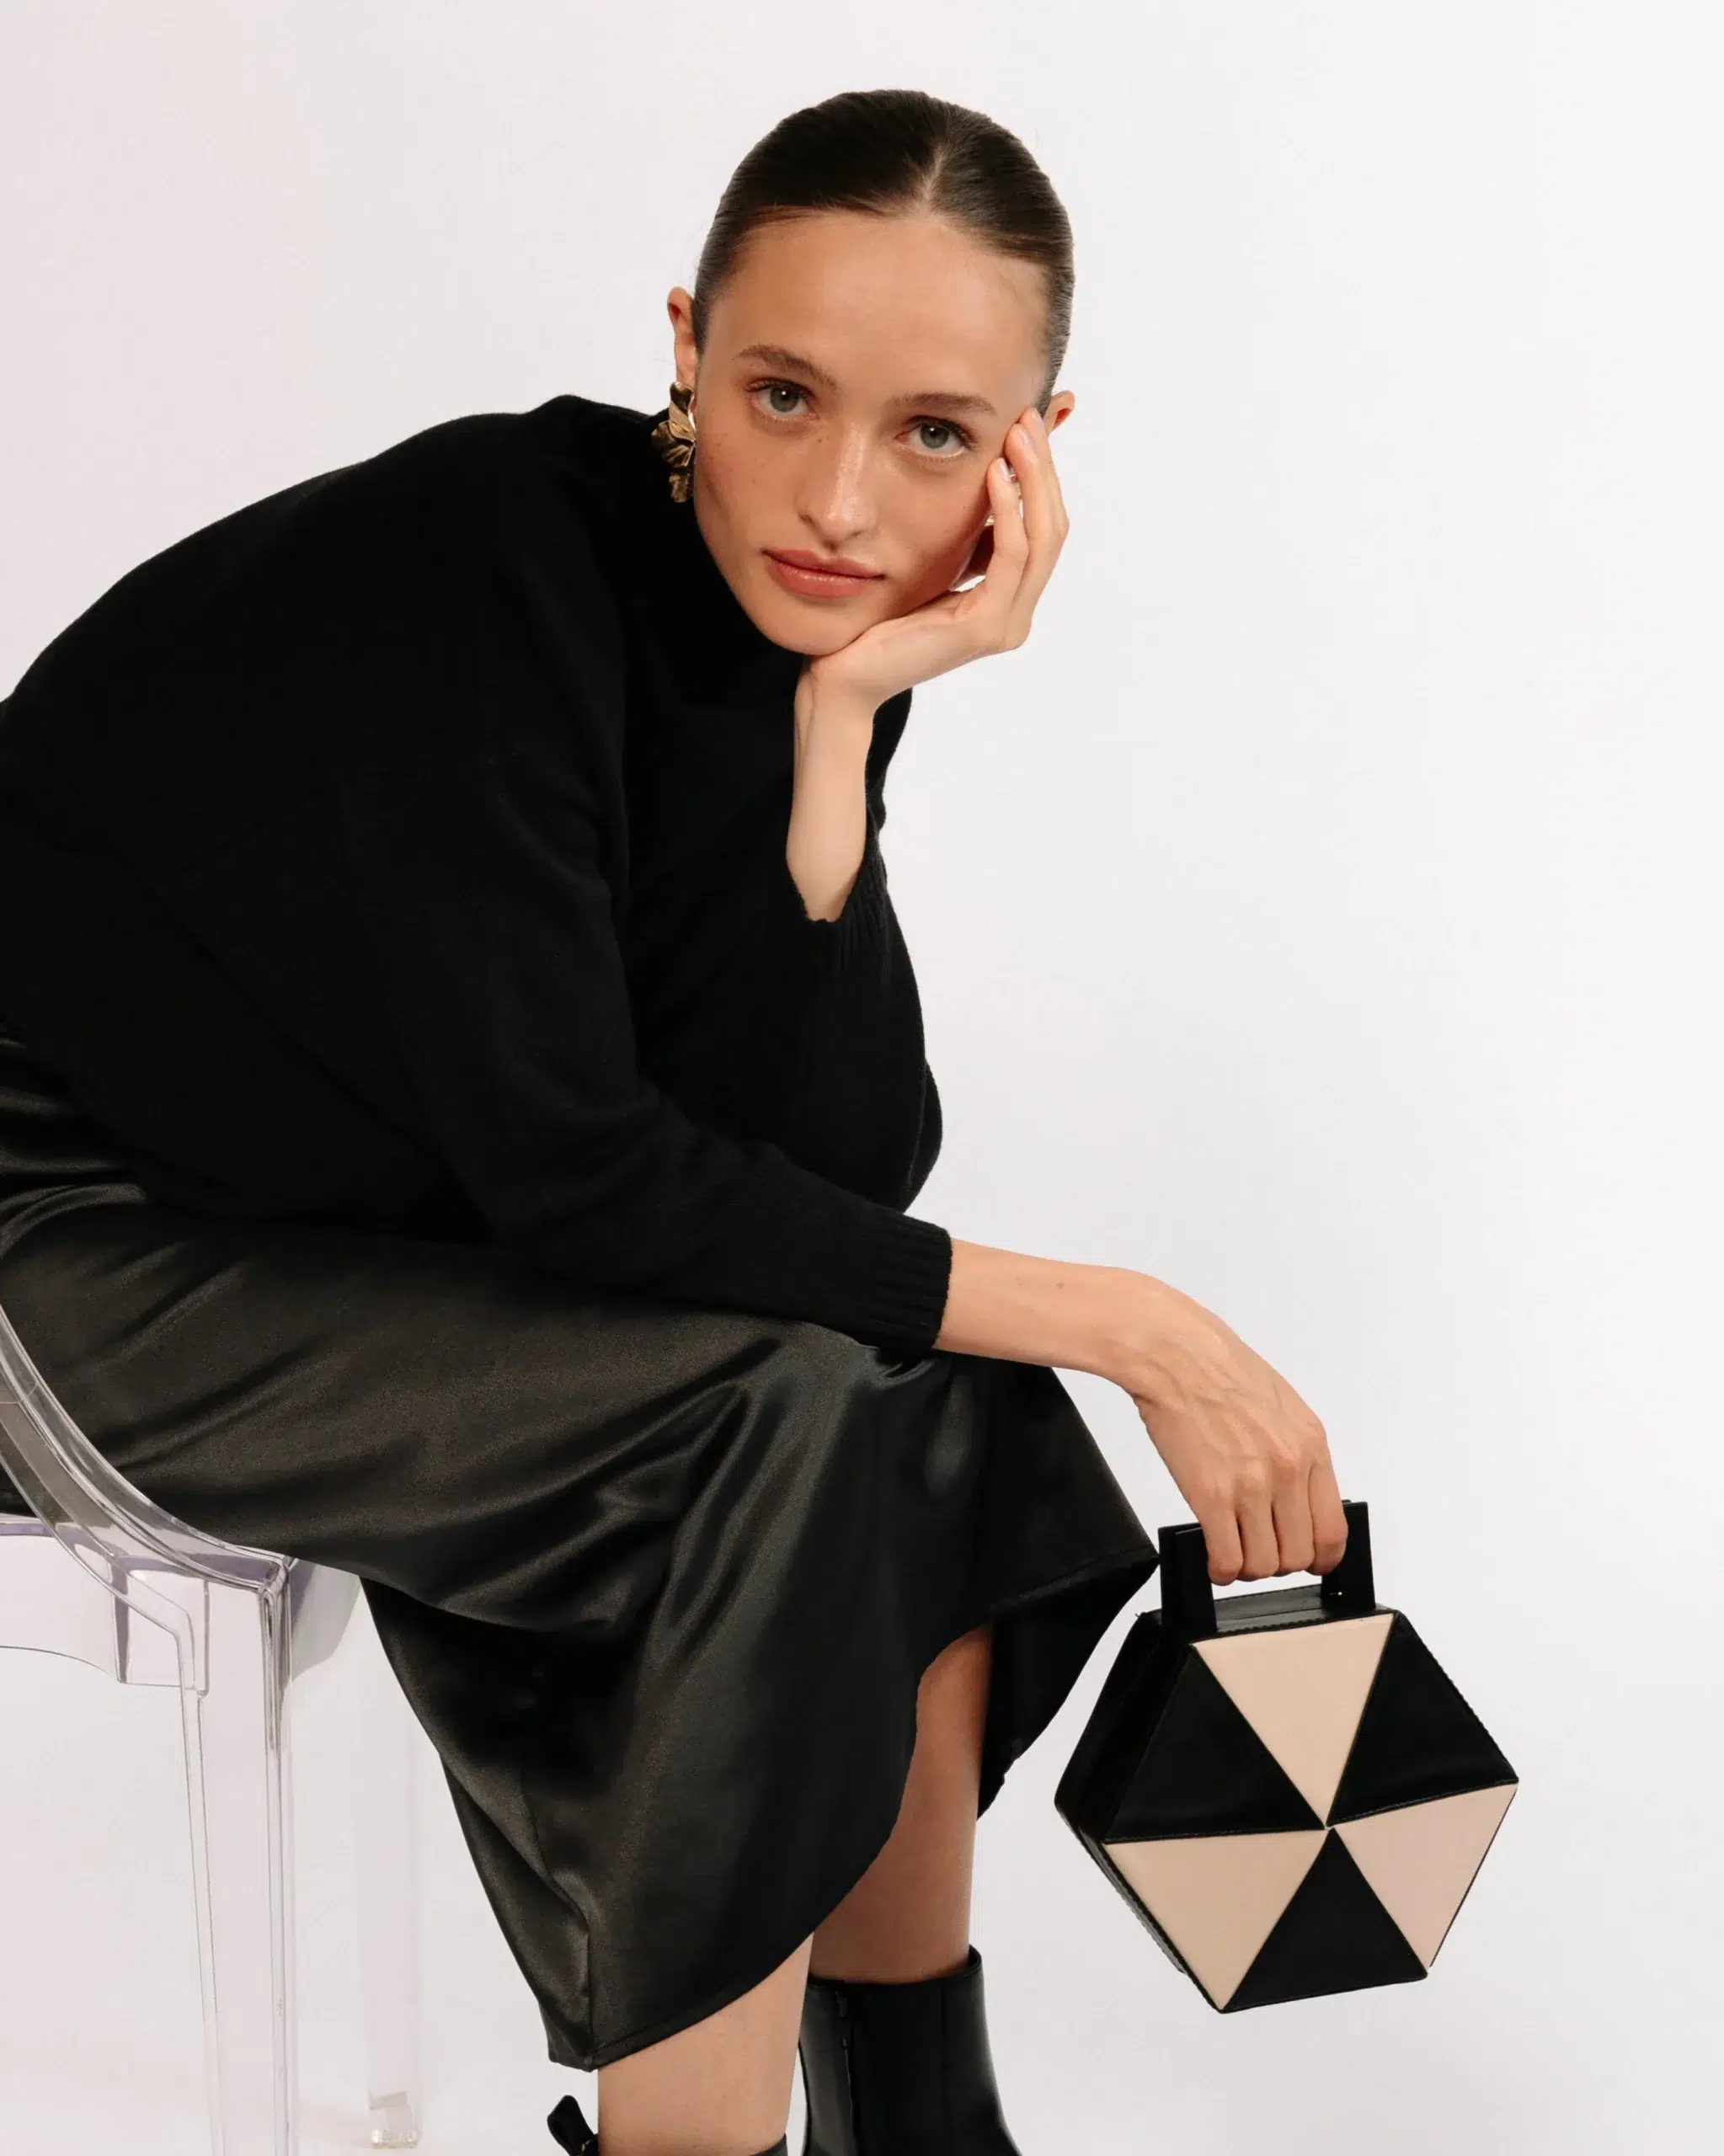 A model holding a tan and black hexagonal purse. 